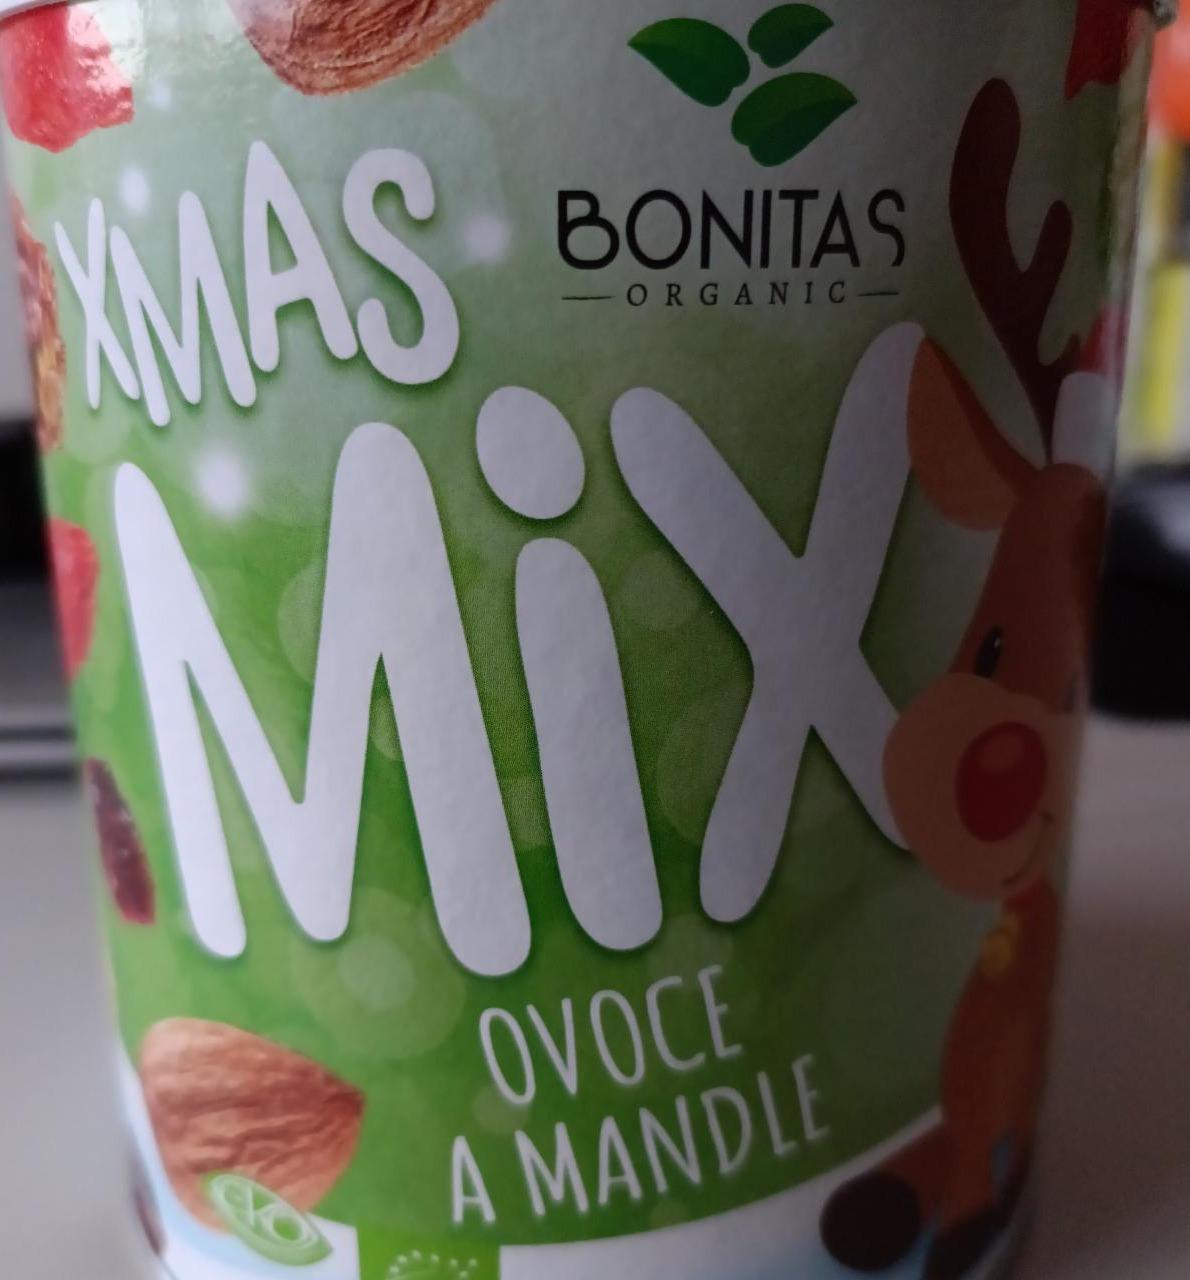 Fotografie - XMAS Mix Ovoce a Mandle Bonitas